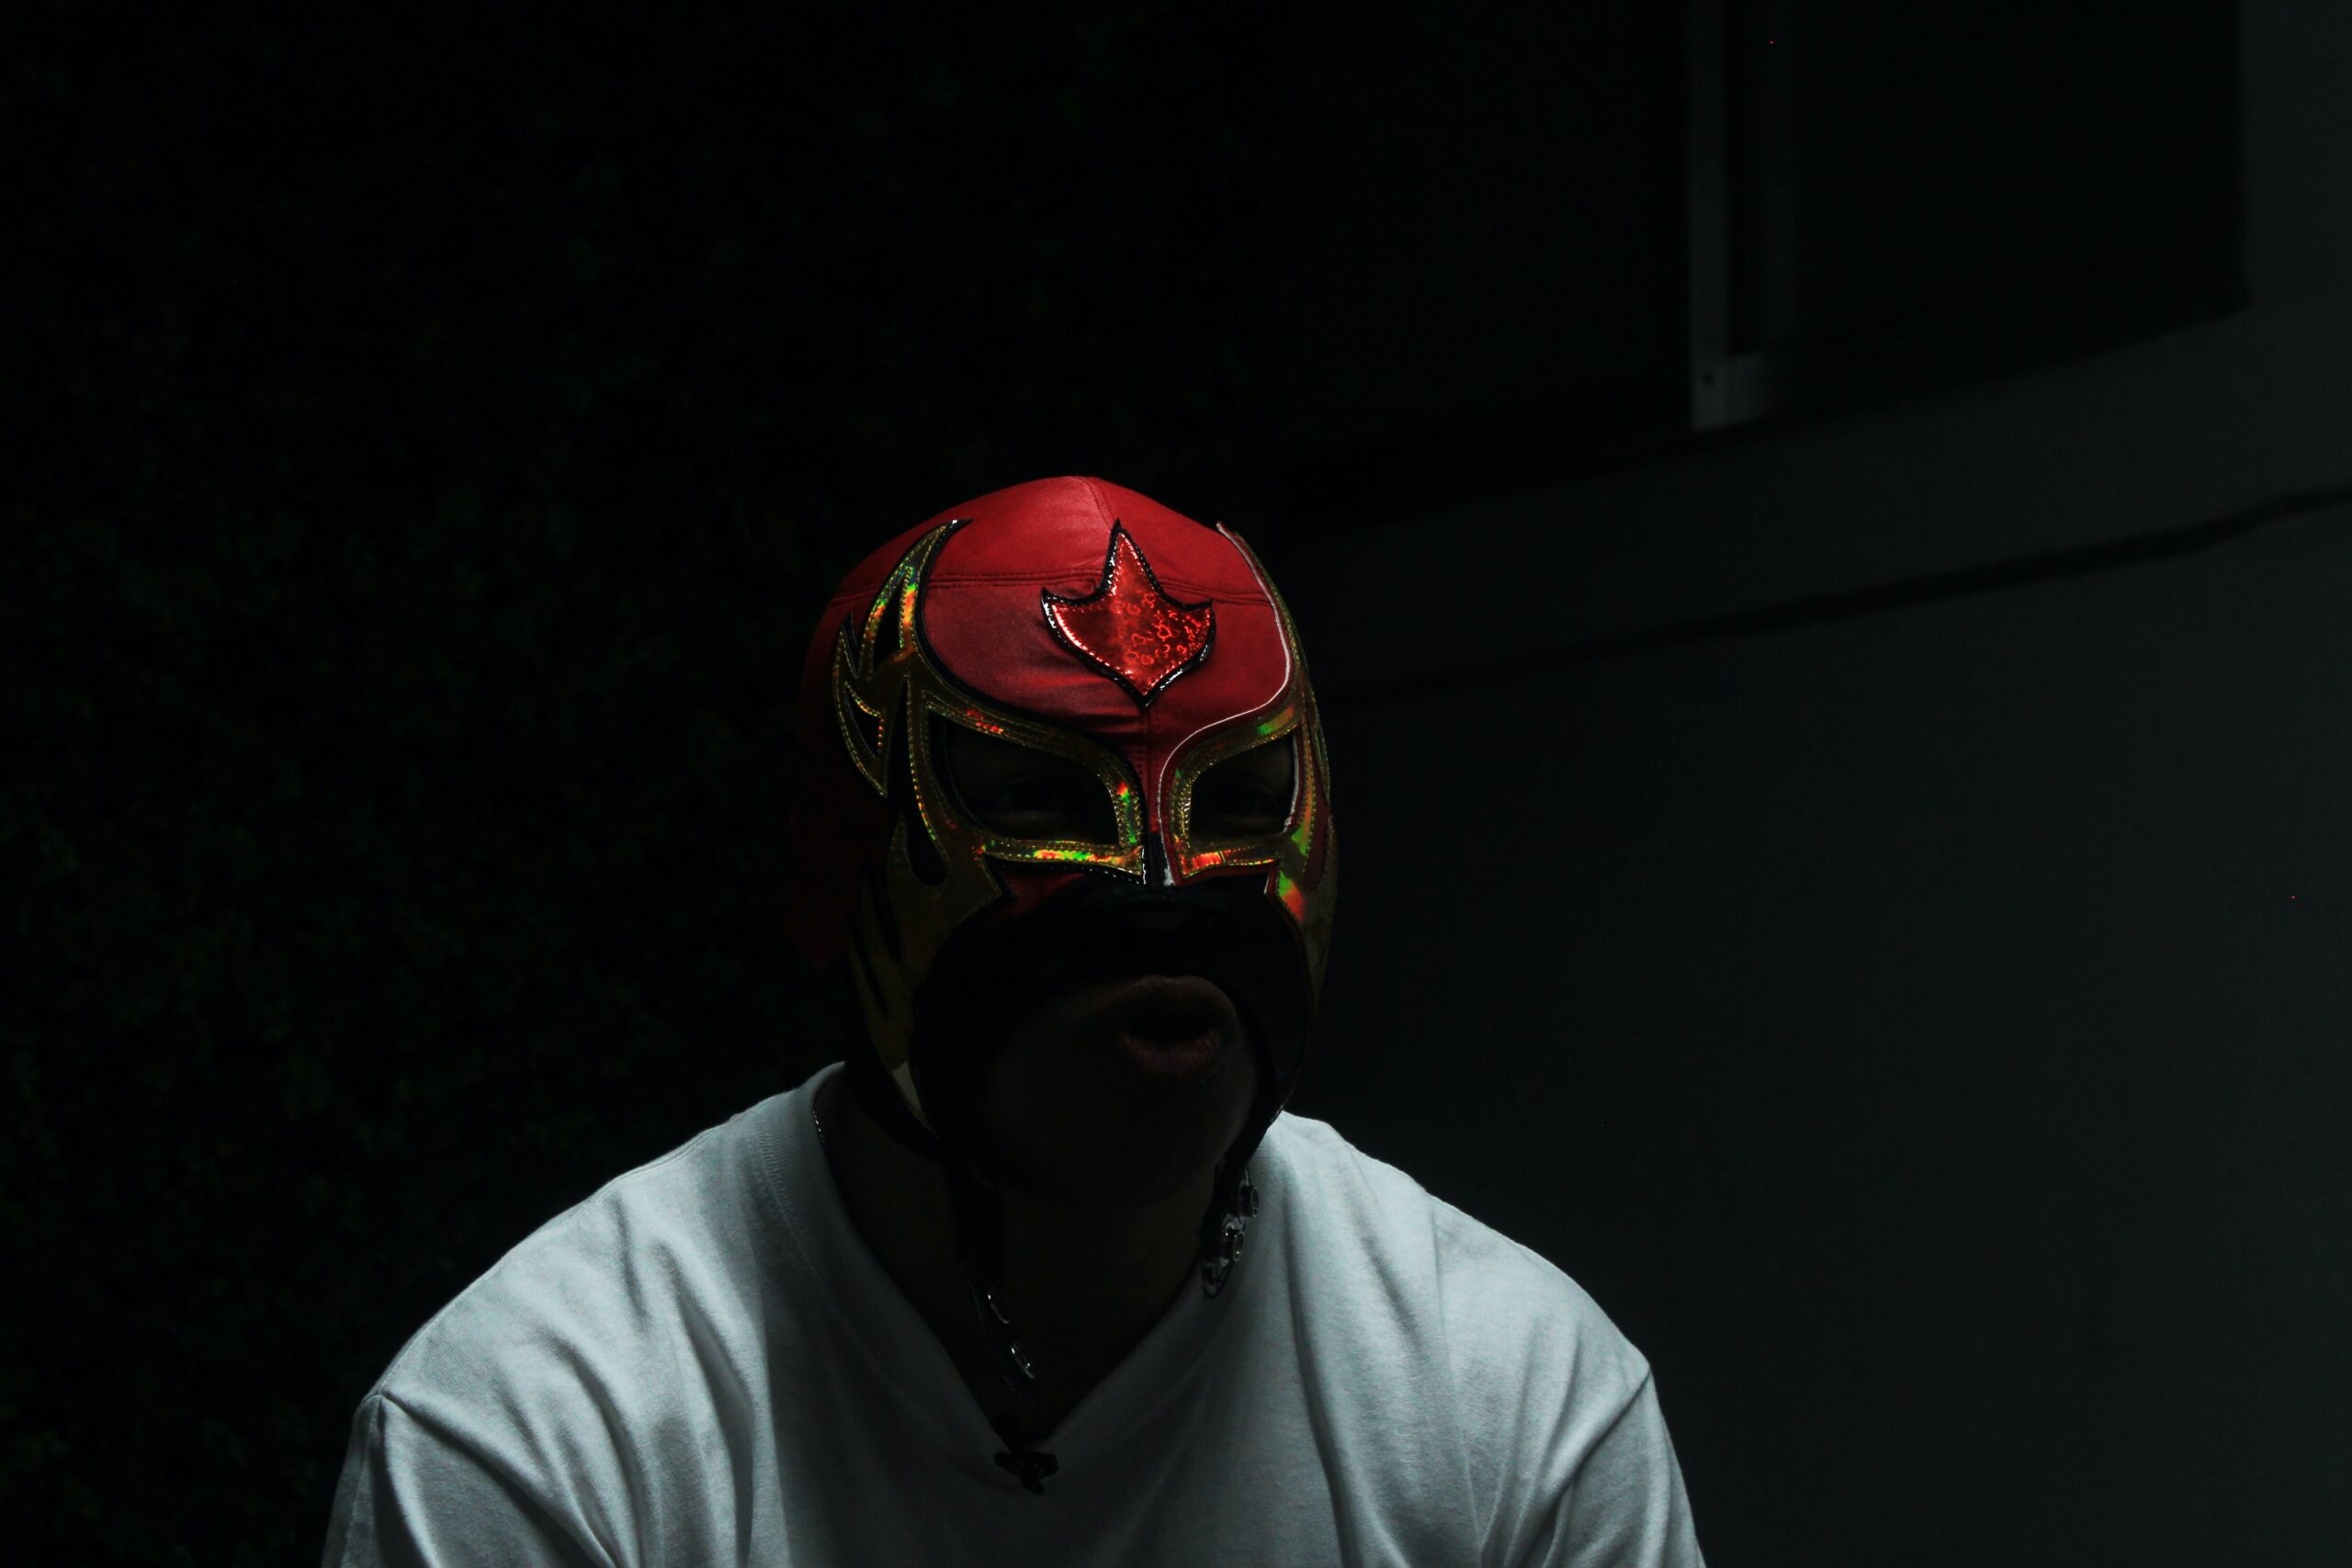 Chris Martinez - The man behind the mask